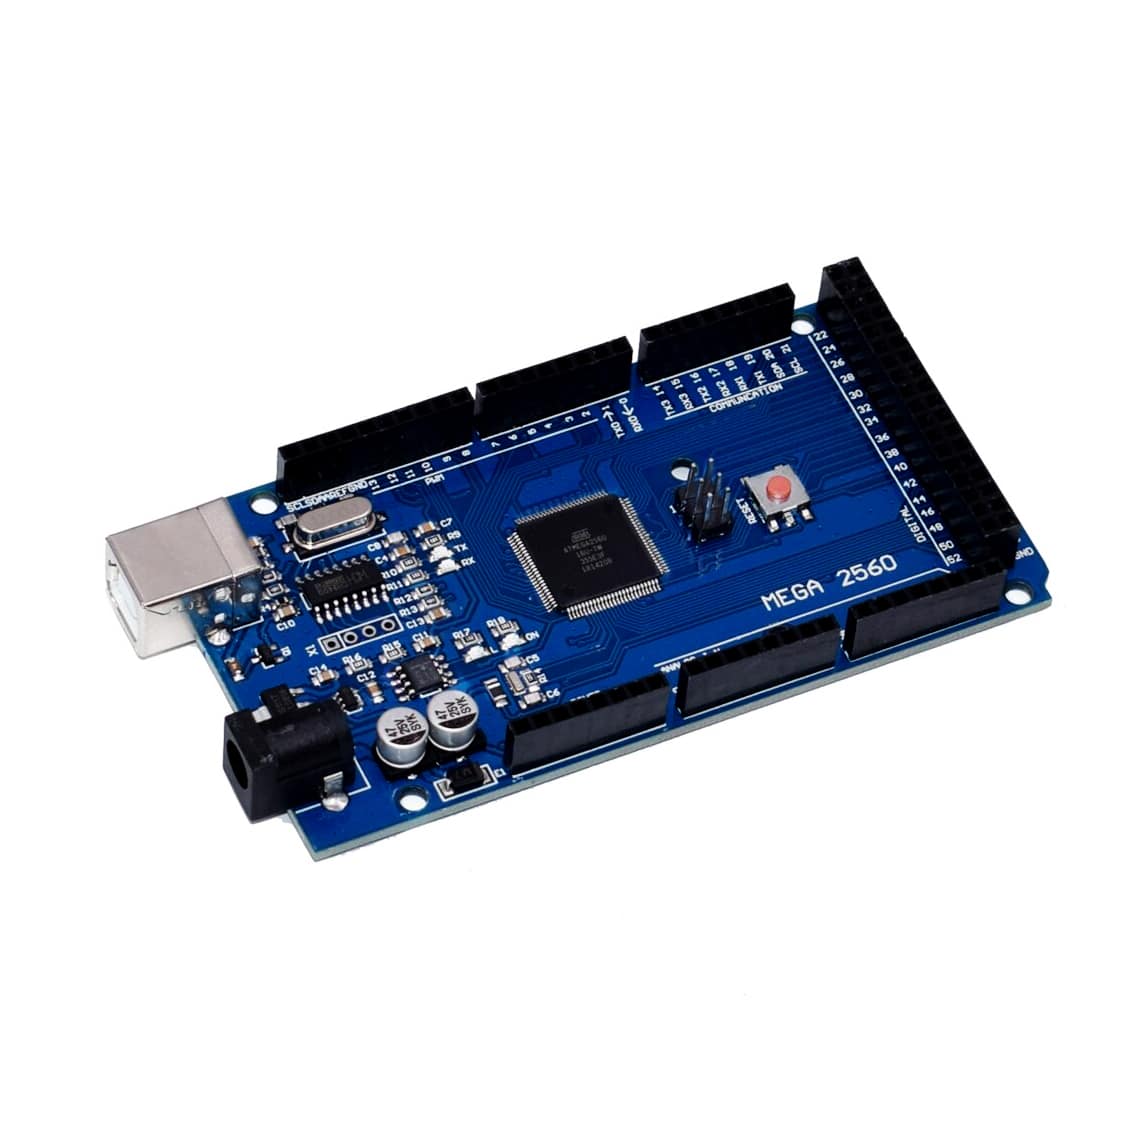 Mega 2560 R3 CH340 Development Board with USB Cable – Arduino Compatible 2